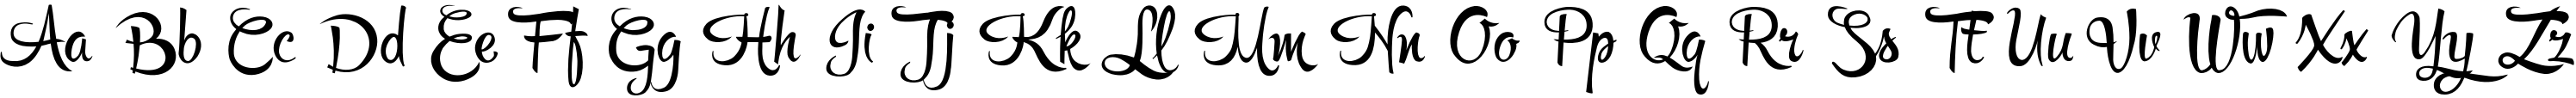 Пример написания английского алфавита шрифтом Rupster Script Free